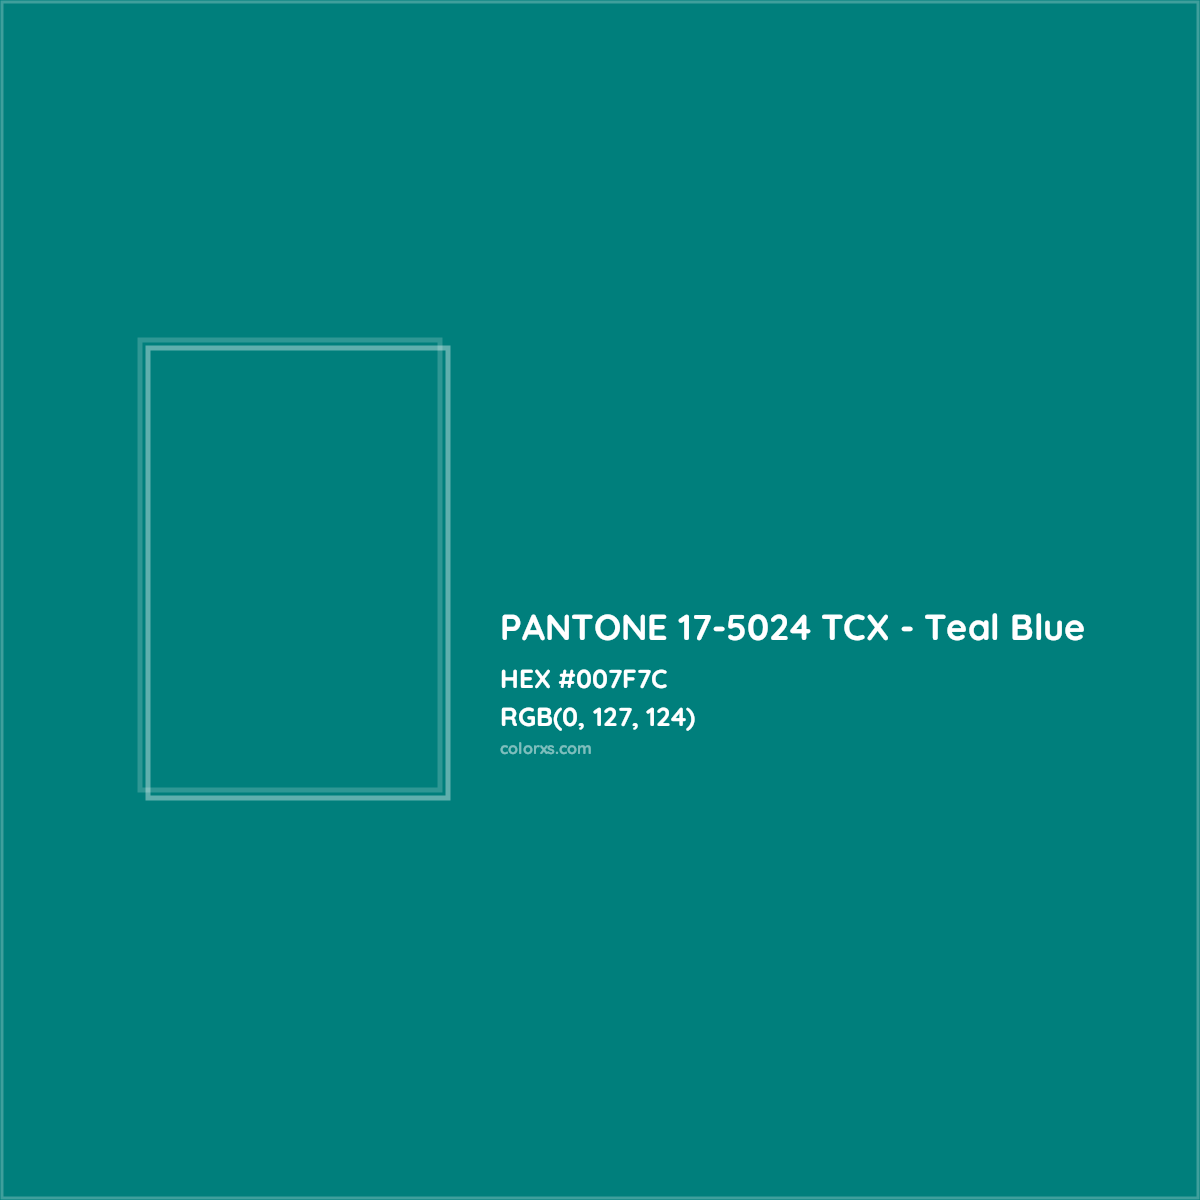 HEX #007F7C PANTONE 17-5024 TCX - Teal Blue CMS Pantone TCX - Color Code